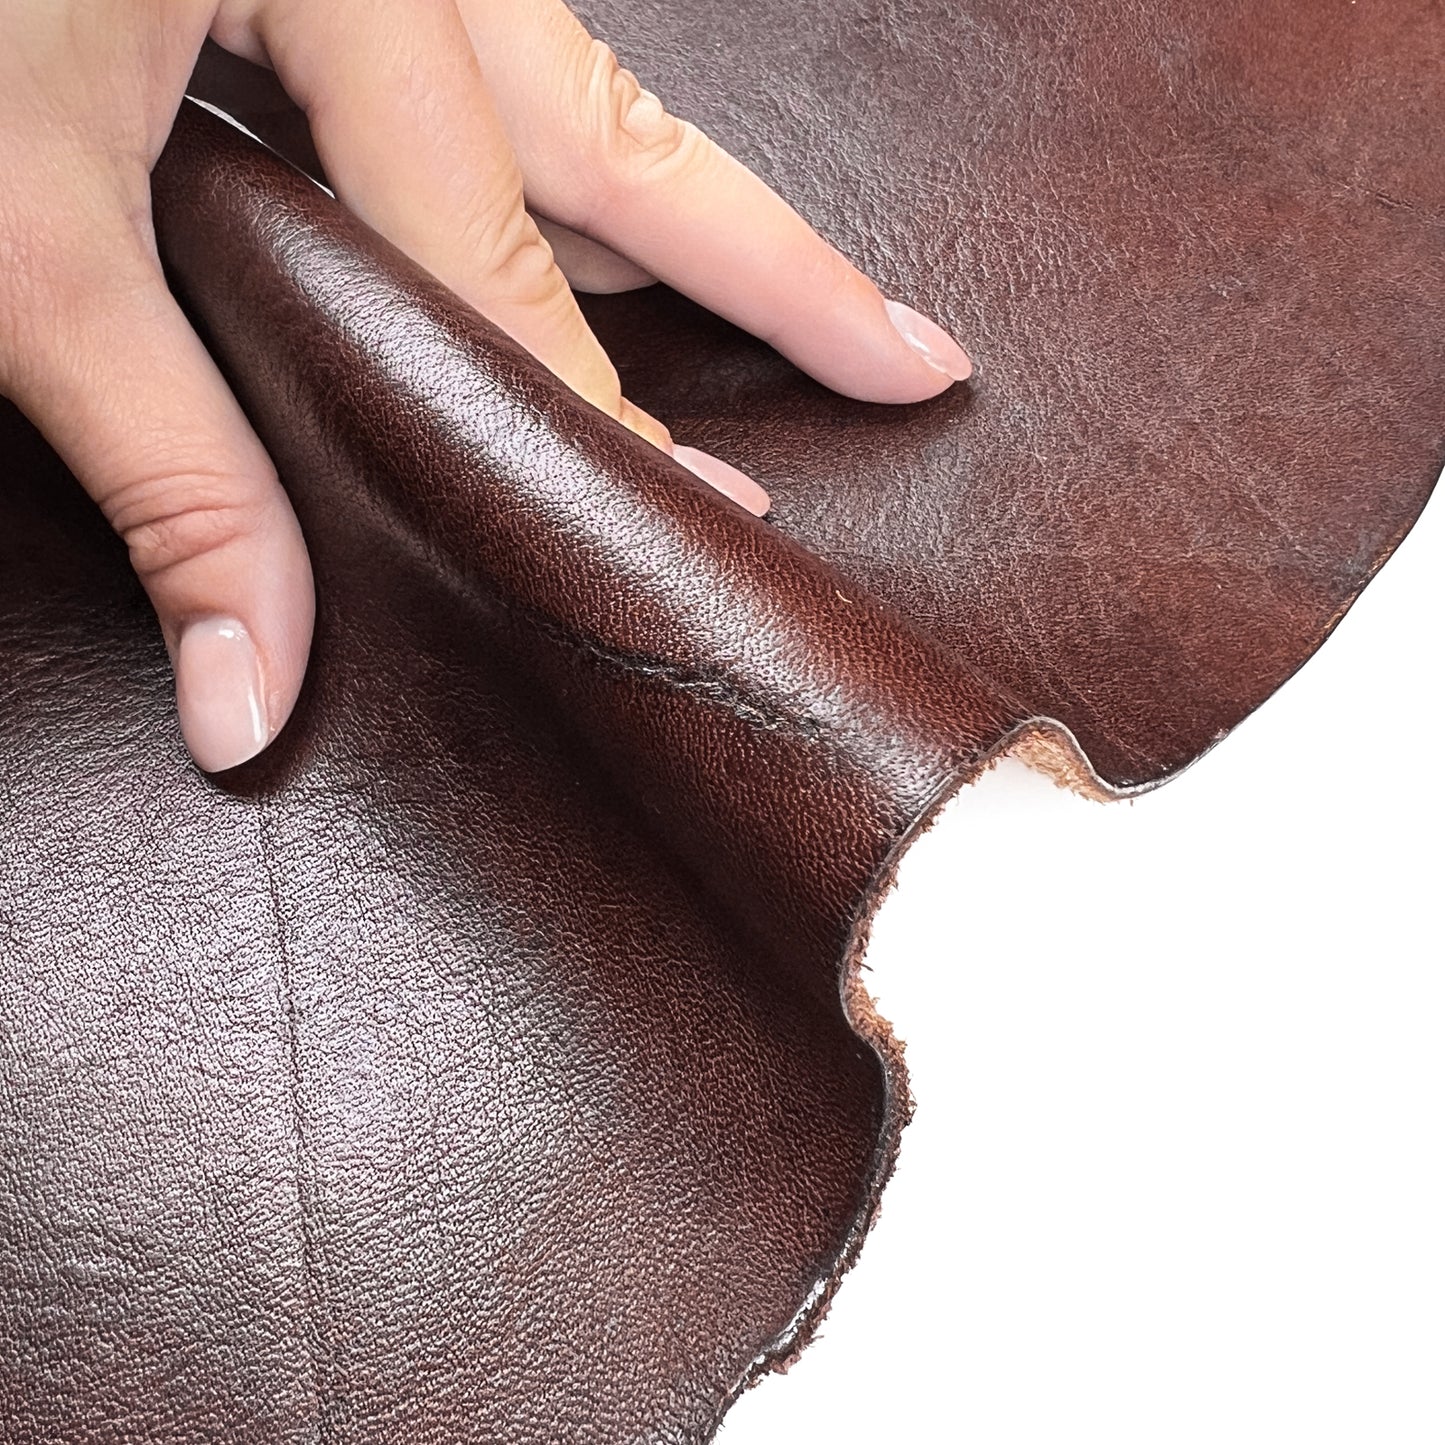 Brown Thick Calfskin Veg Side Hide With Texture 1.7-1.9mm/4.25-4.75oz Dark Brown VEG TAN 1455